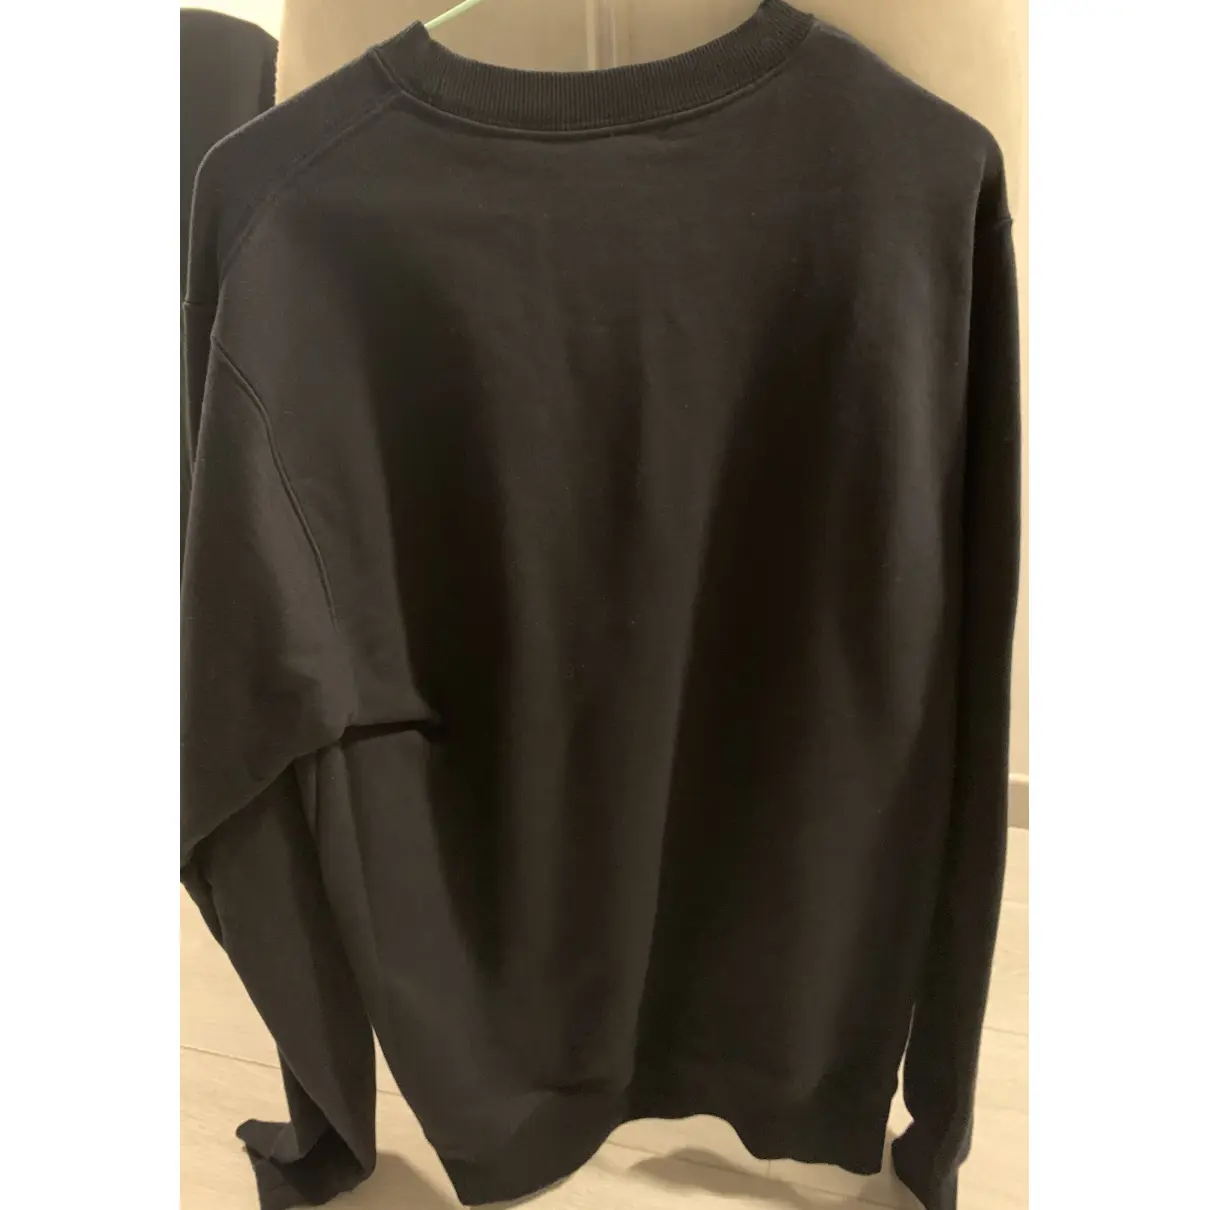 Buy Dior Homme Black Cotton Knitwear & Sweatshirt online